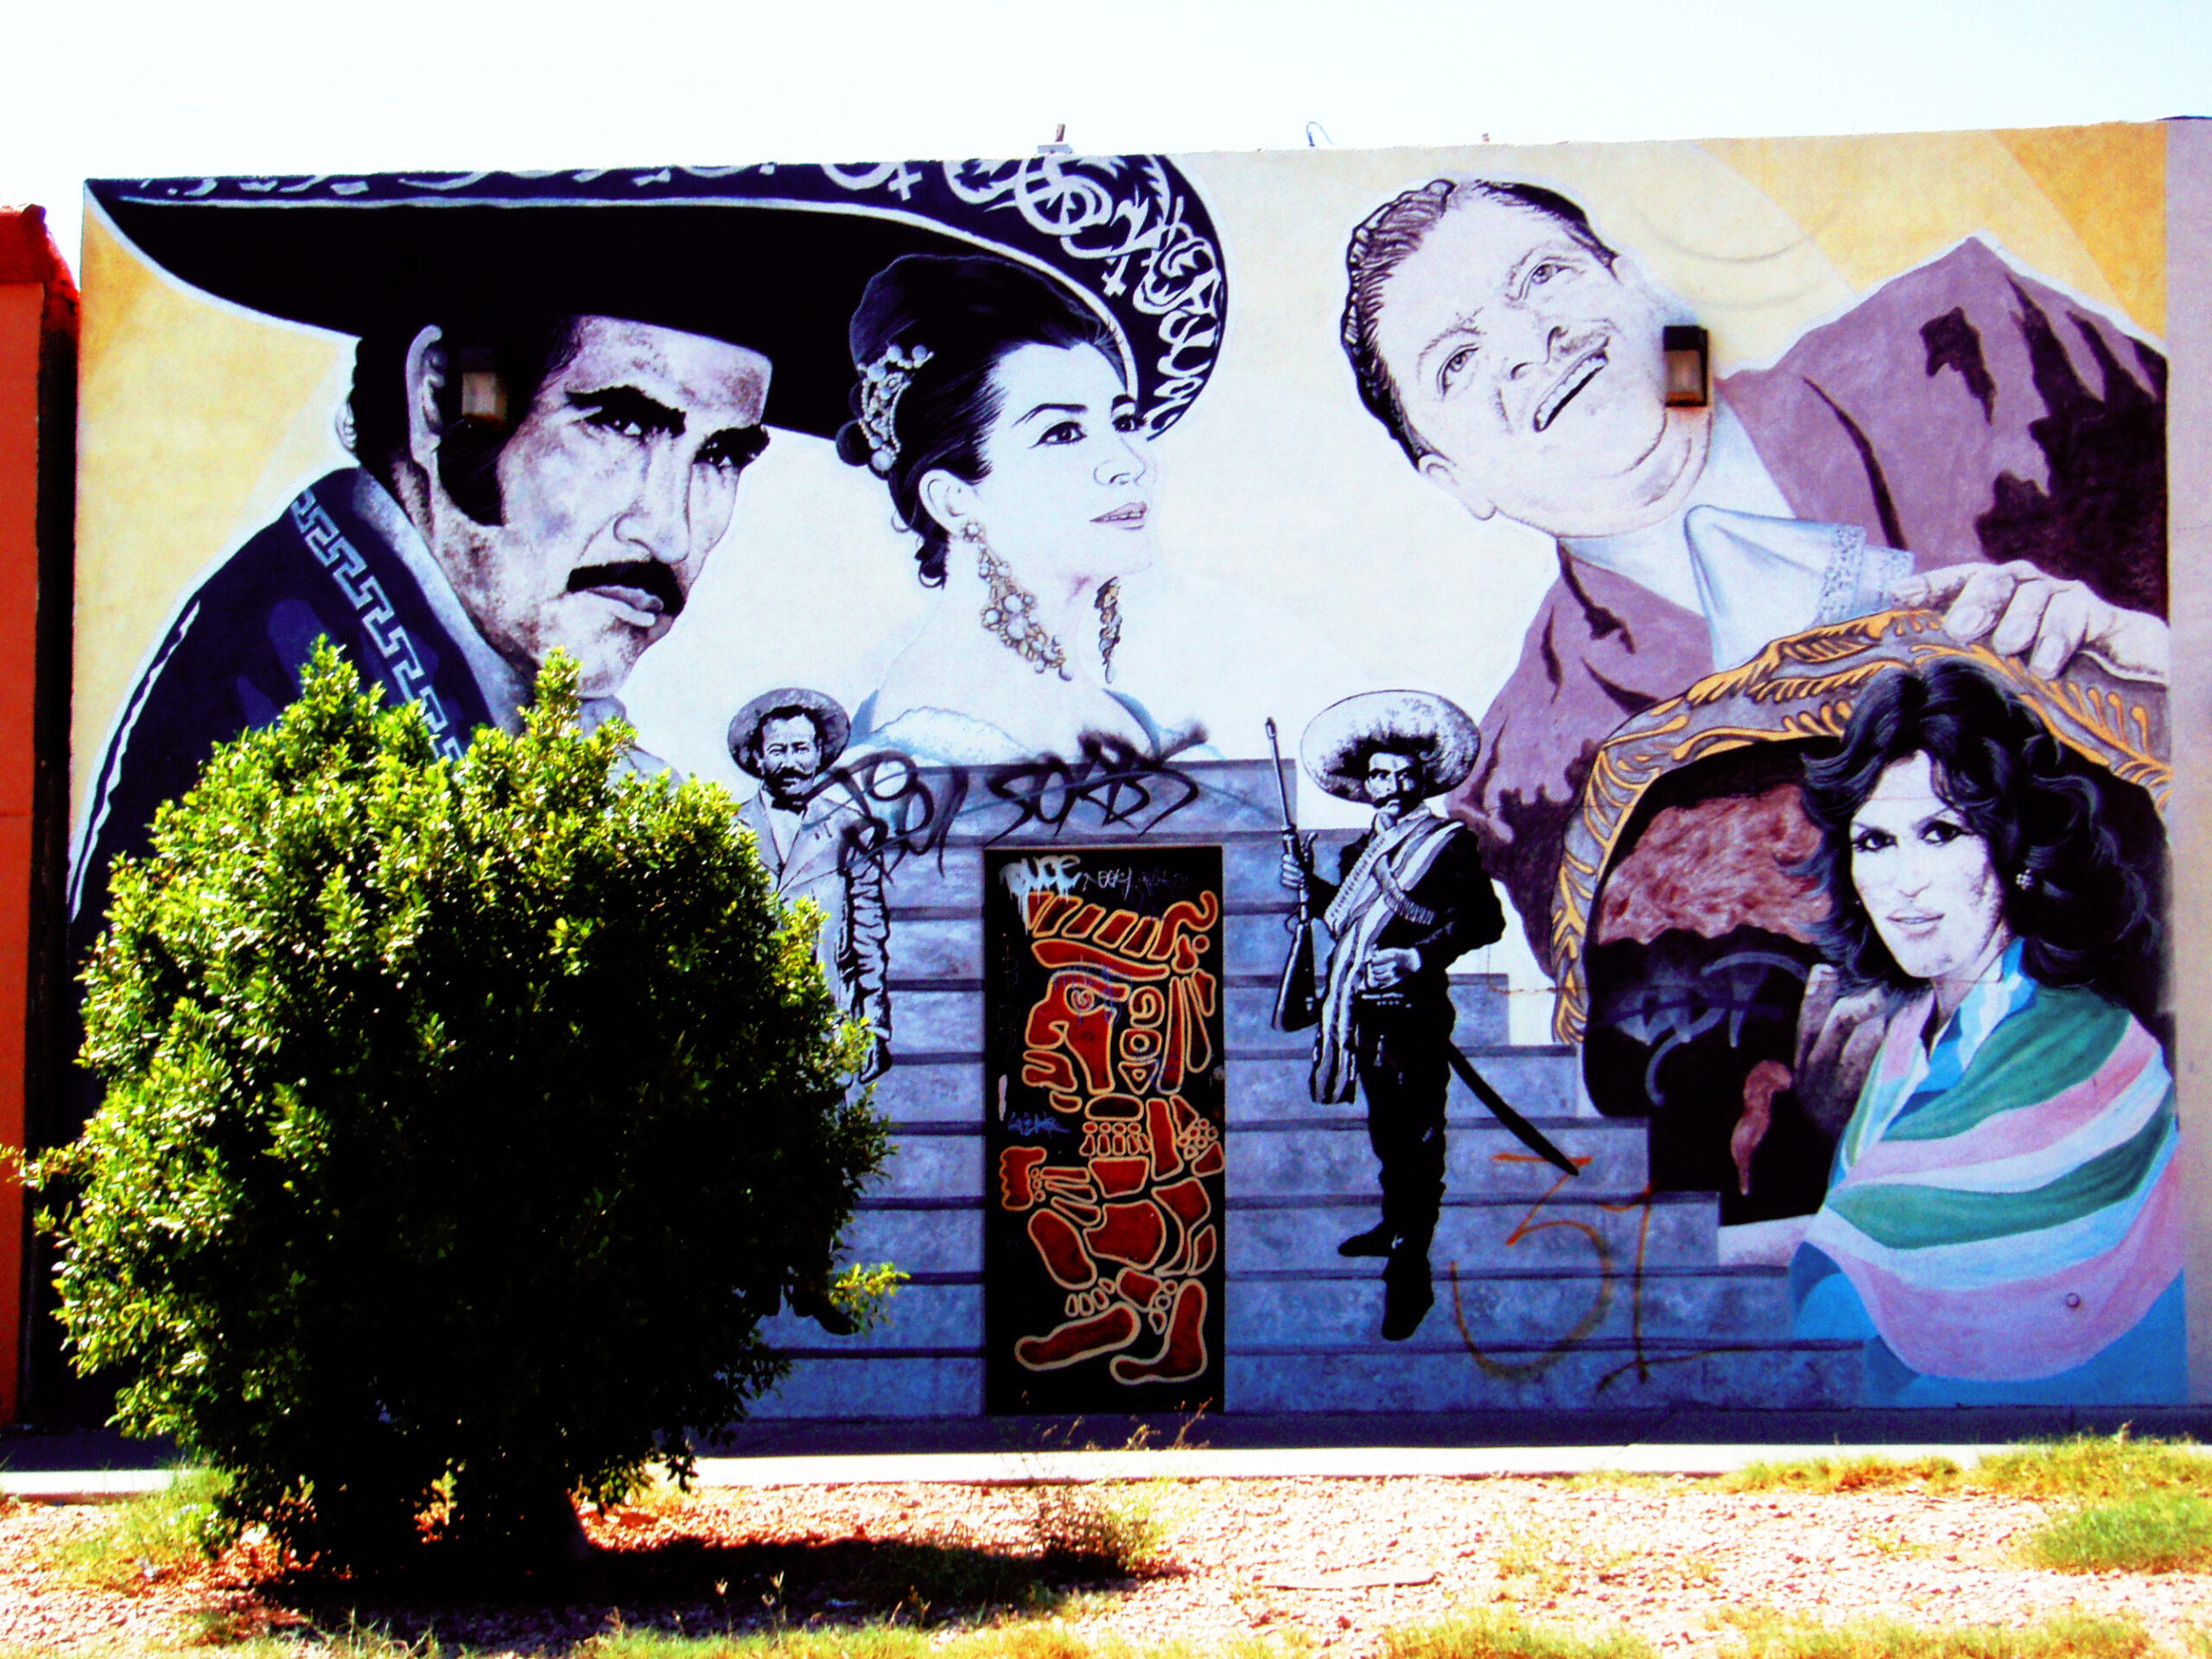 Chente mural. Photo via Ms. Phoenix/Flickr.